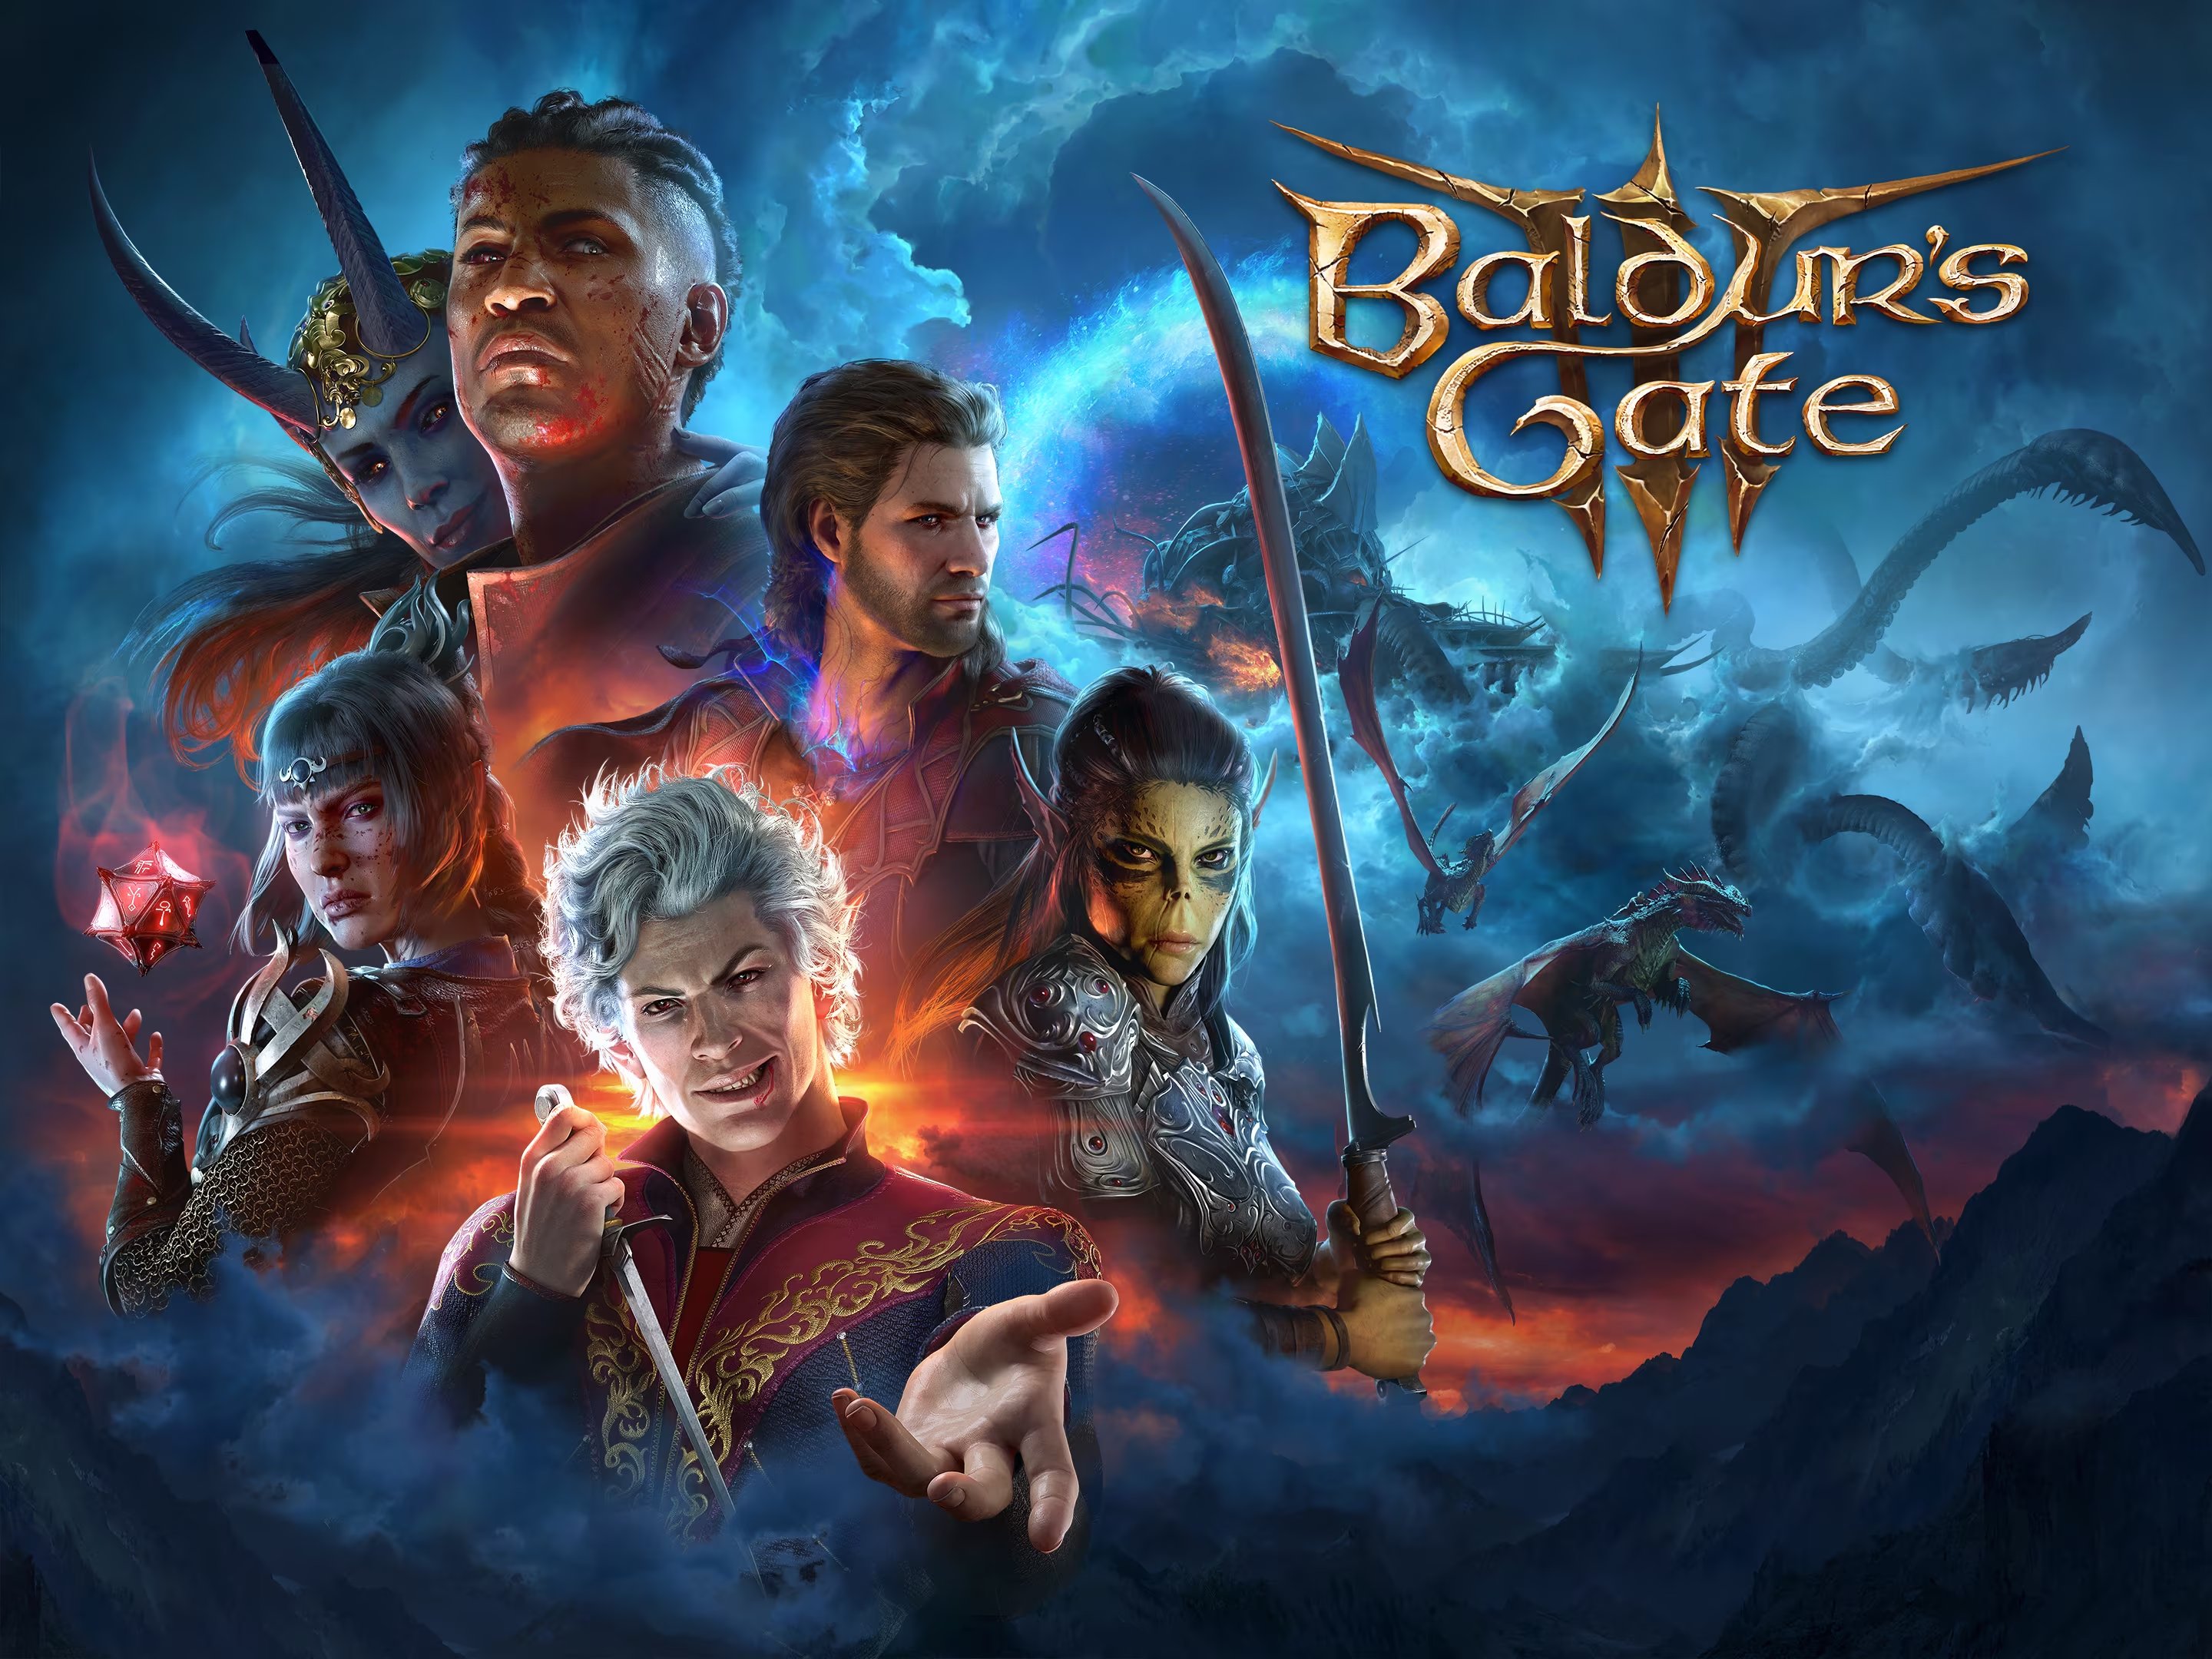 Tom Warren on X: Baldur's Gate 3 wins Game of the Year at